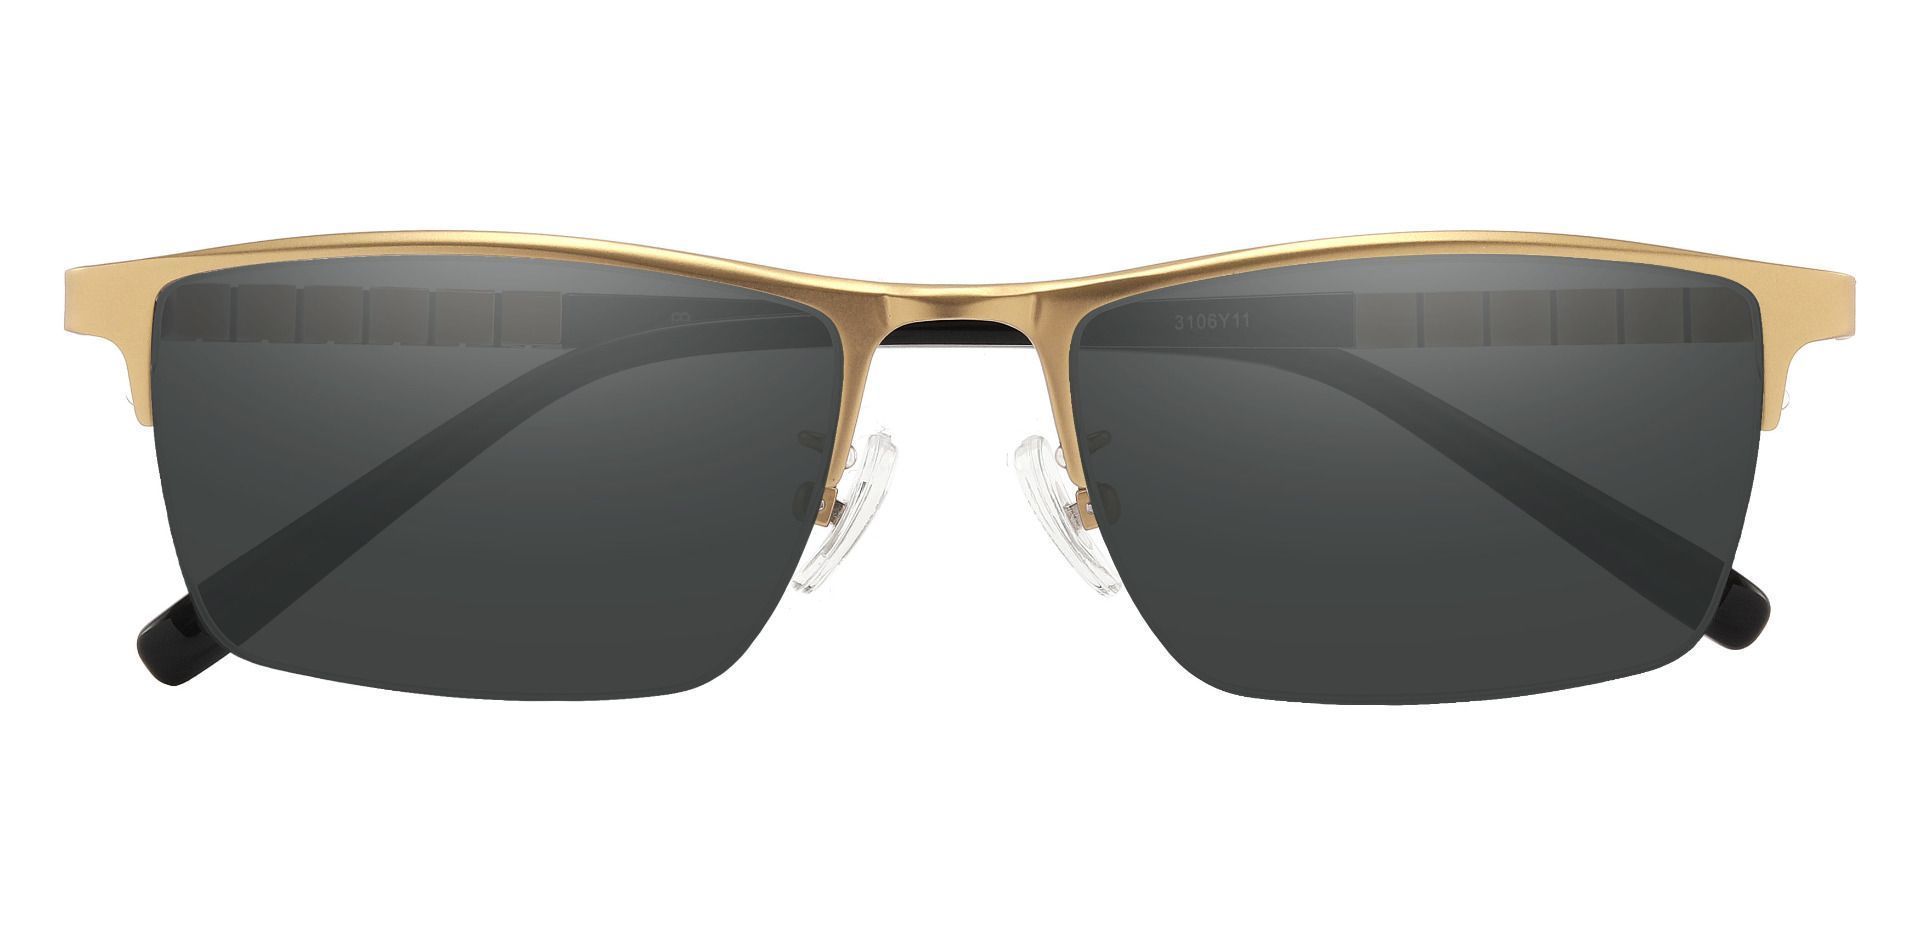 Maine Rectangle Progressive Sunglasses - Gold Frame With Gray Lenses